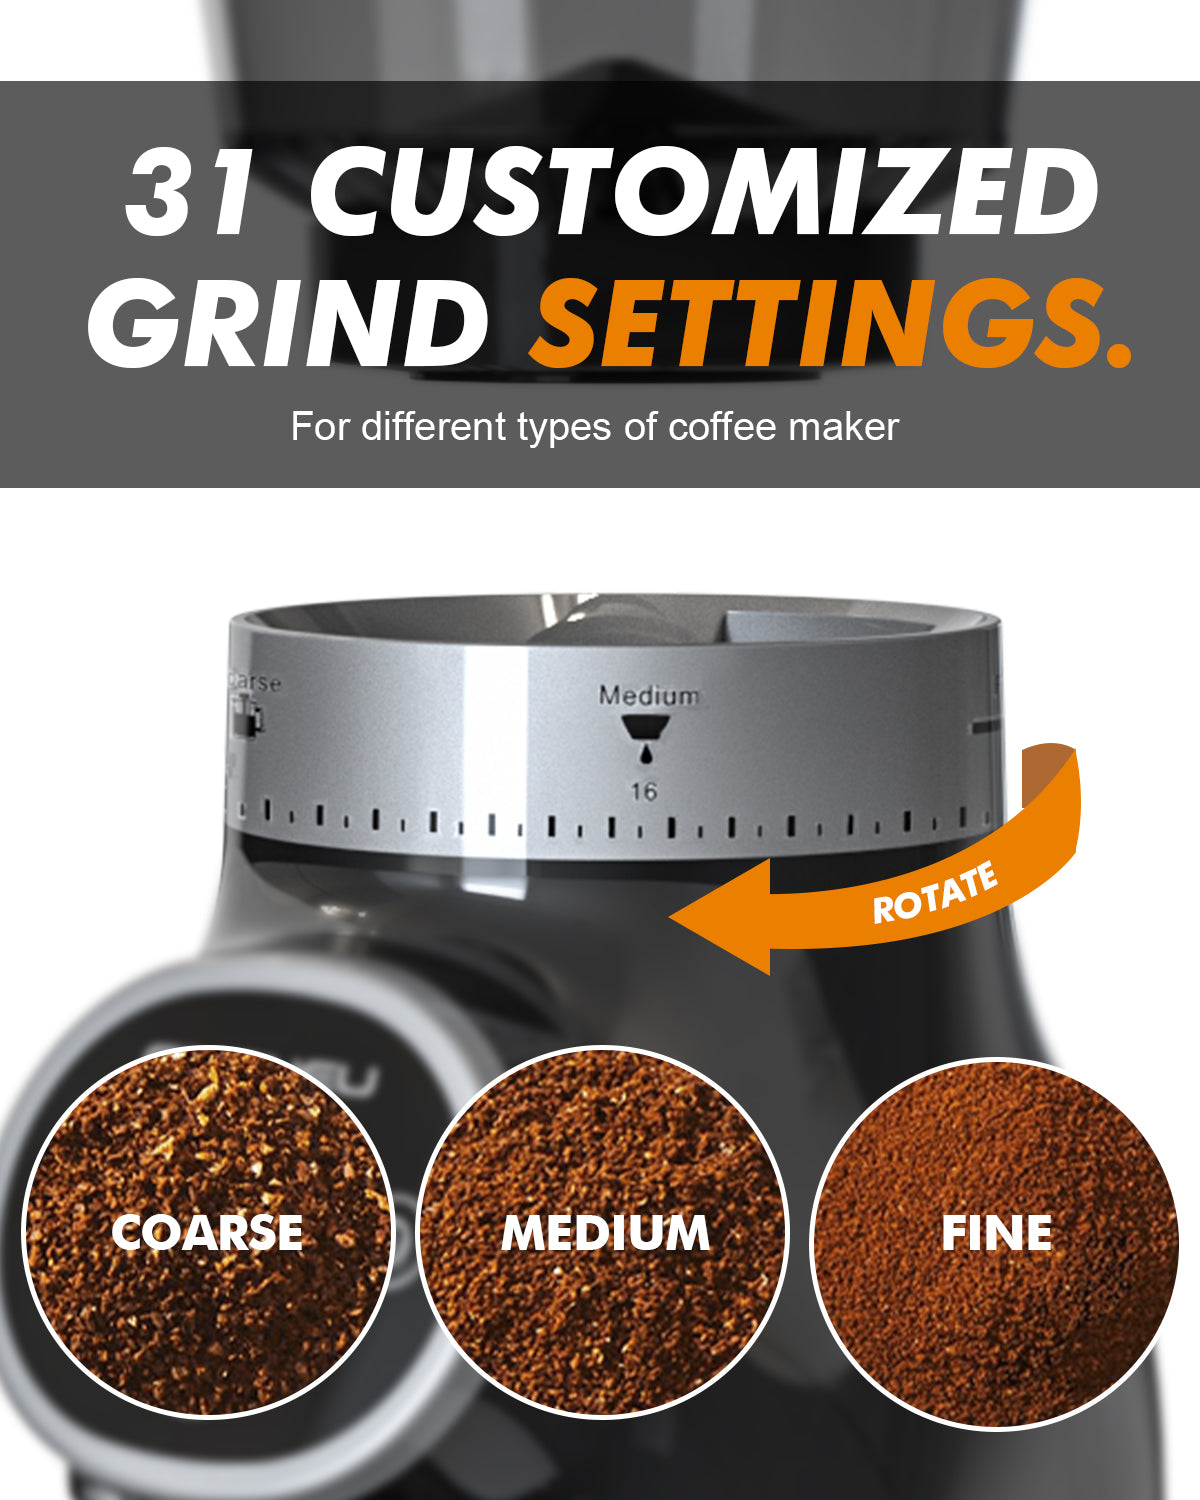 Best burr coffee grinder 2021 with plastic jar Giveneu™